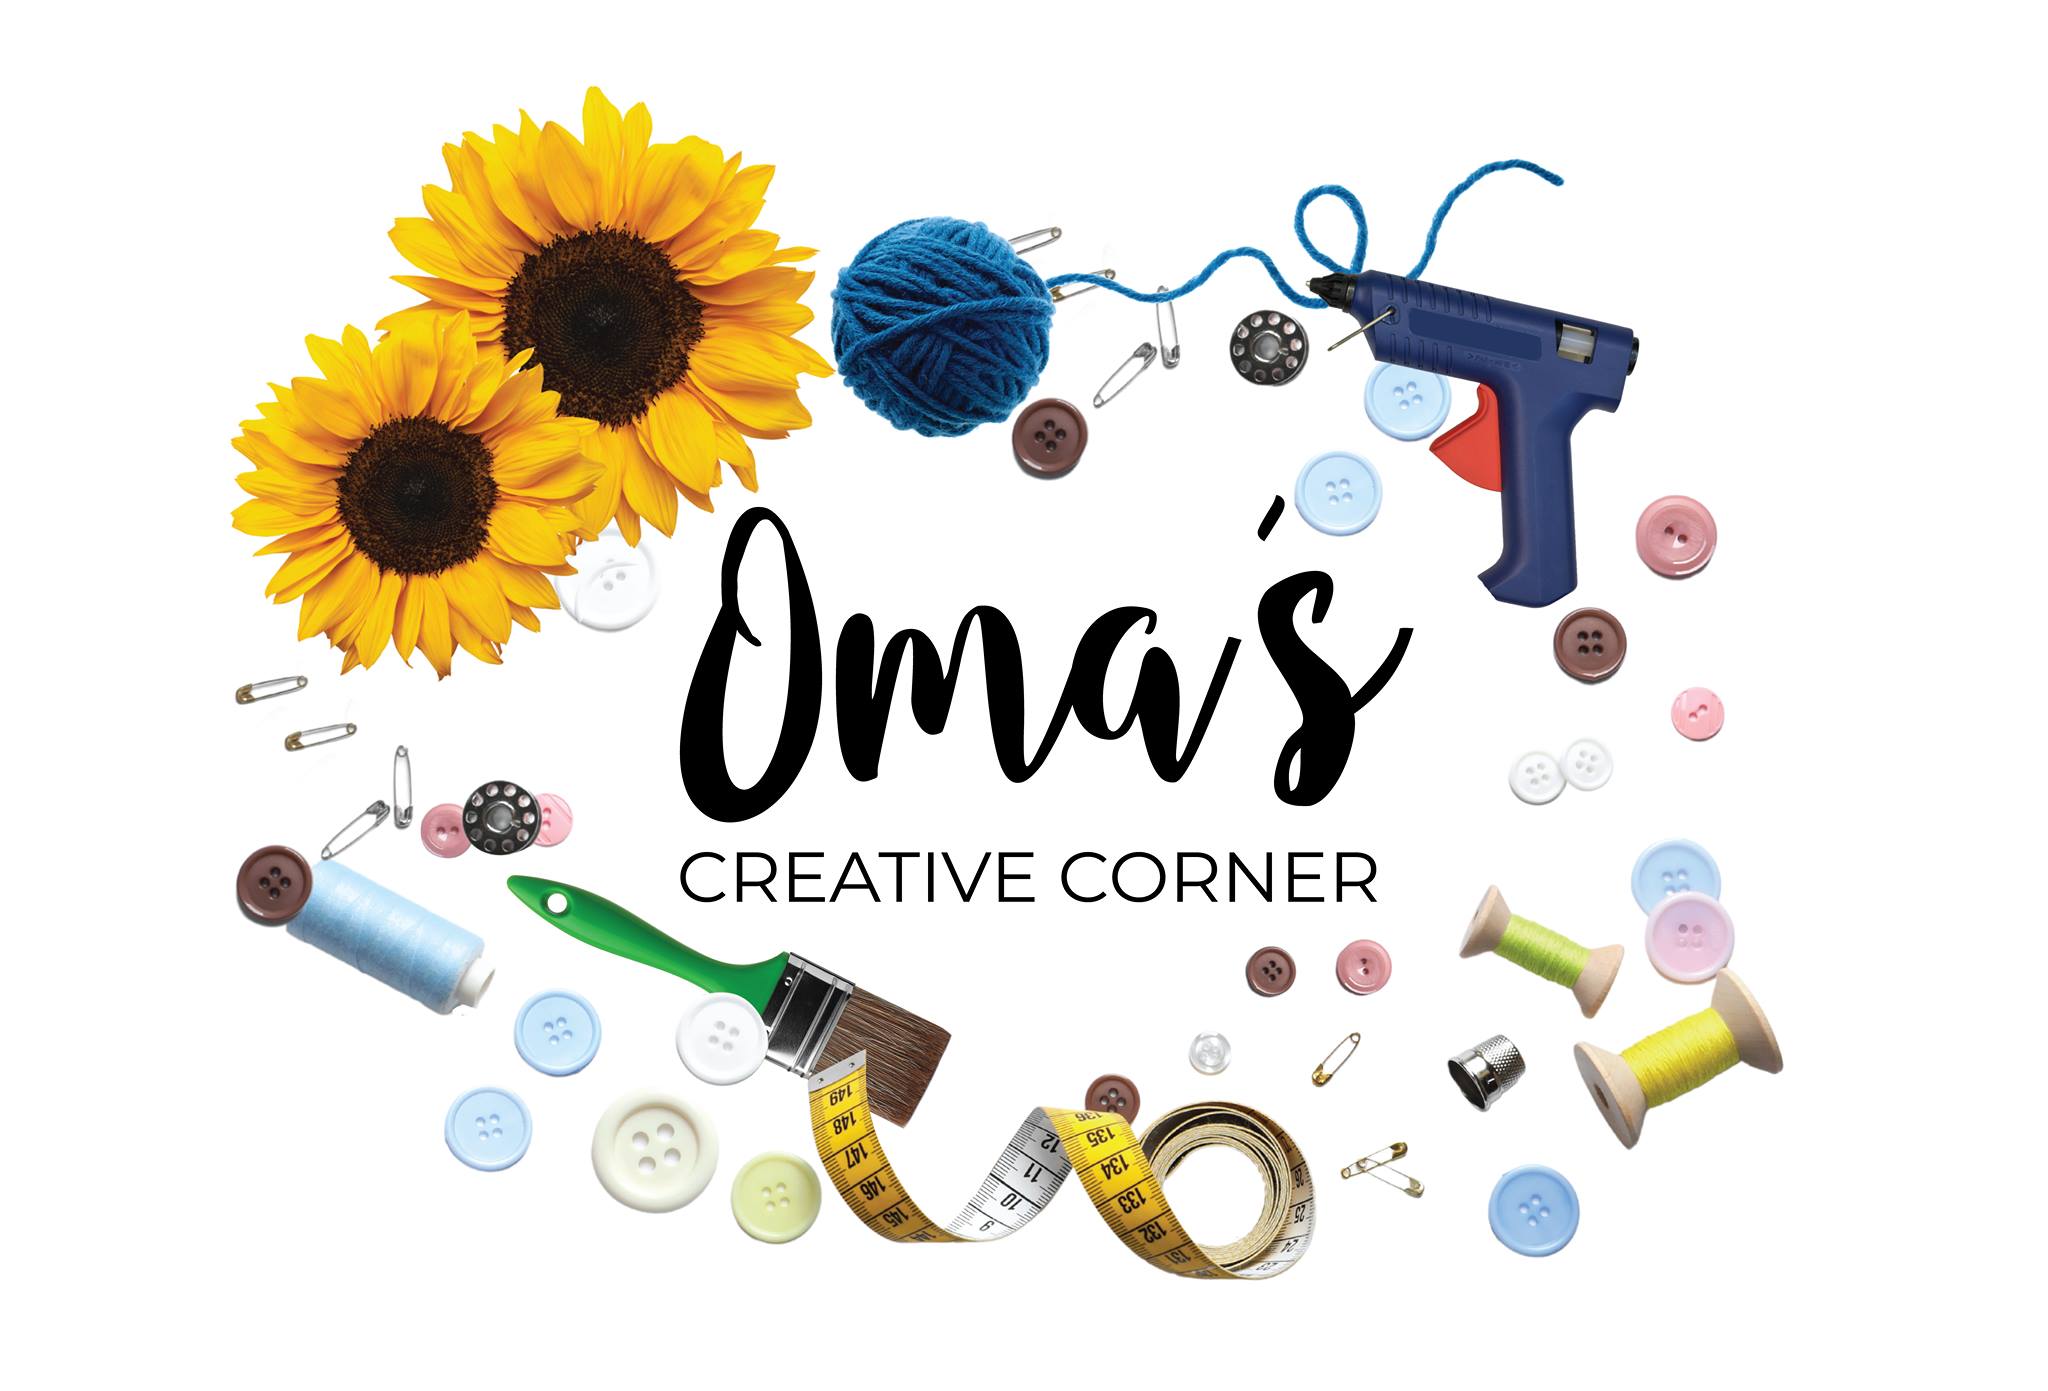 Oma’s Creative Corner